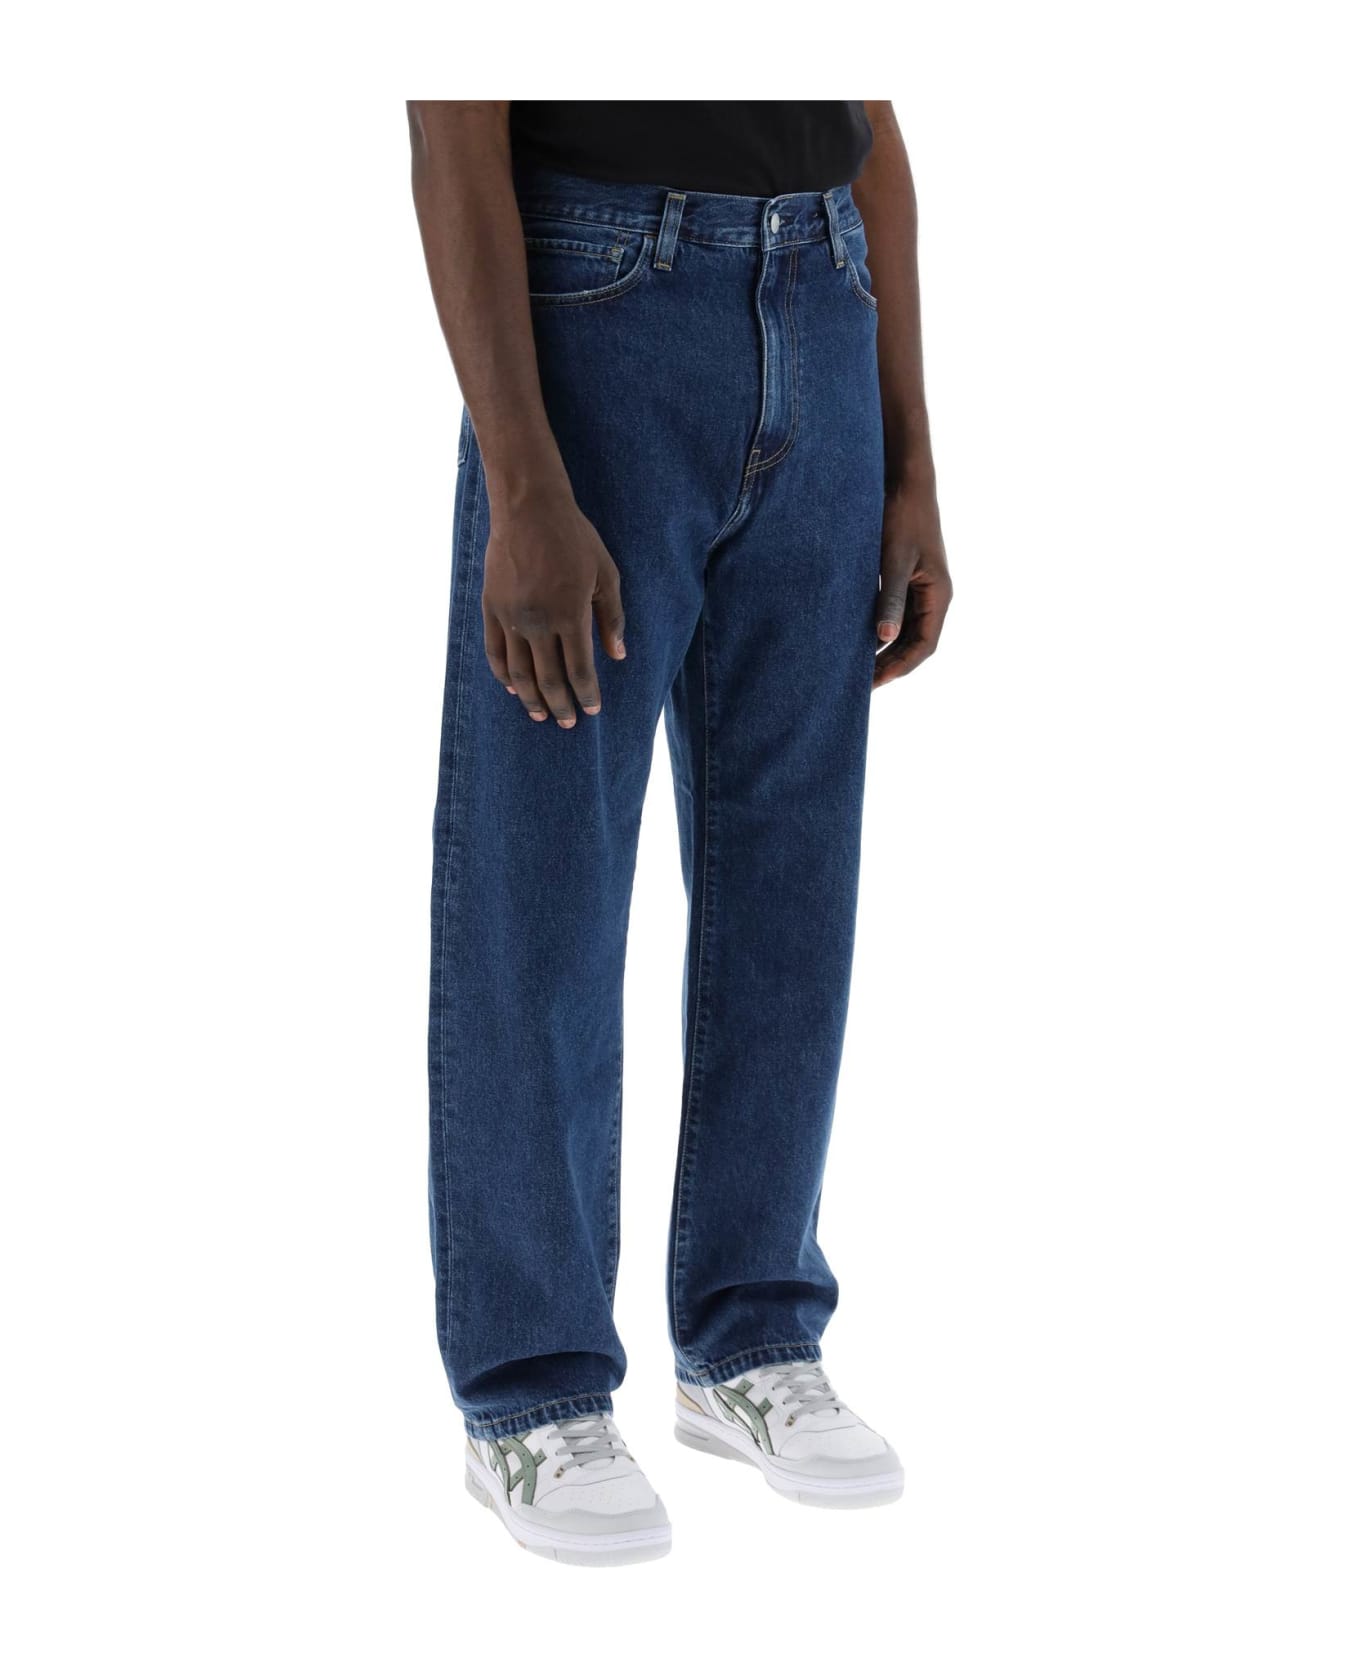 Carhartt Landon Denim Jeans - BLUE HEAVY STONE WASH